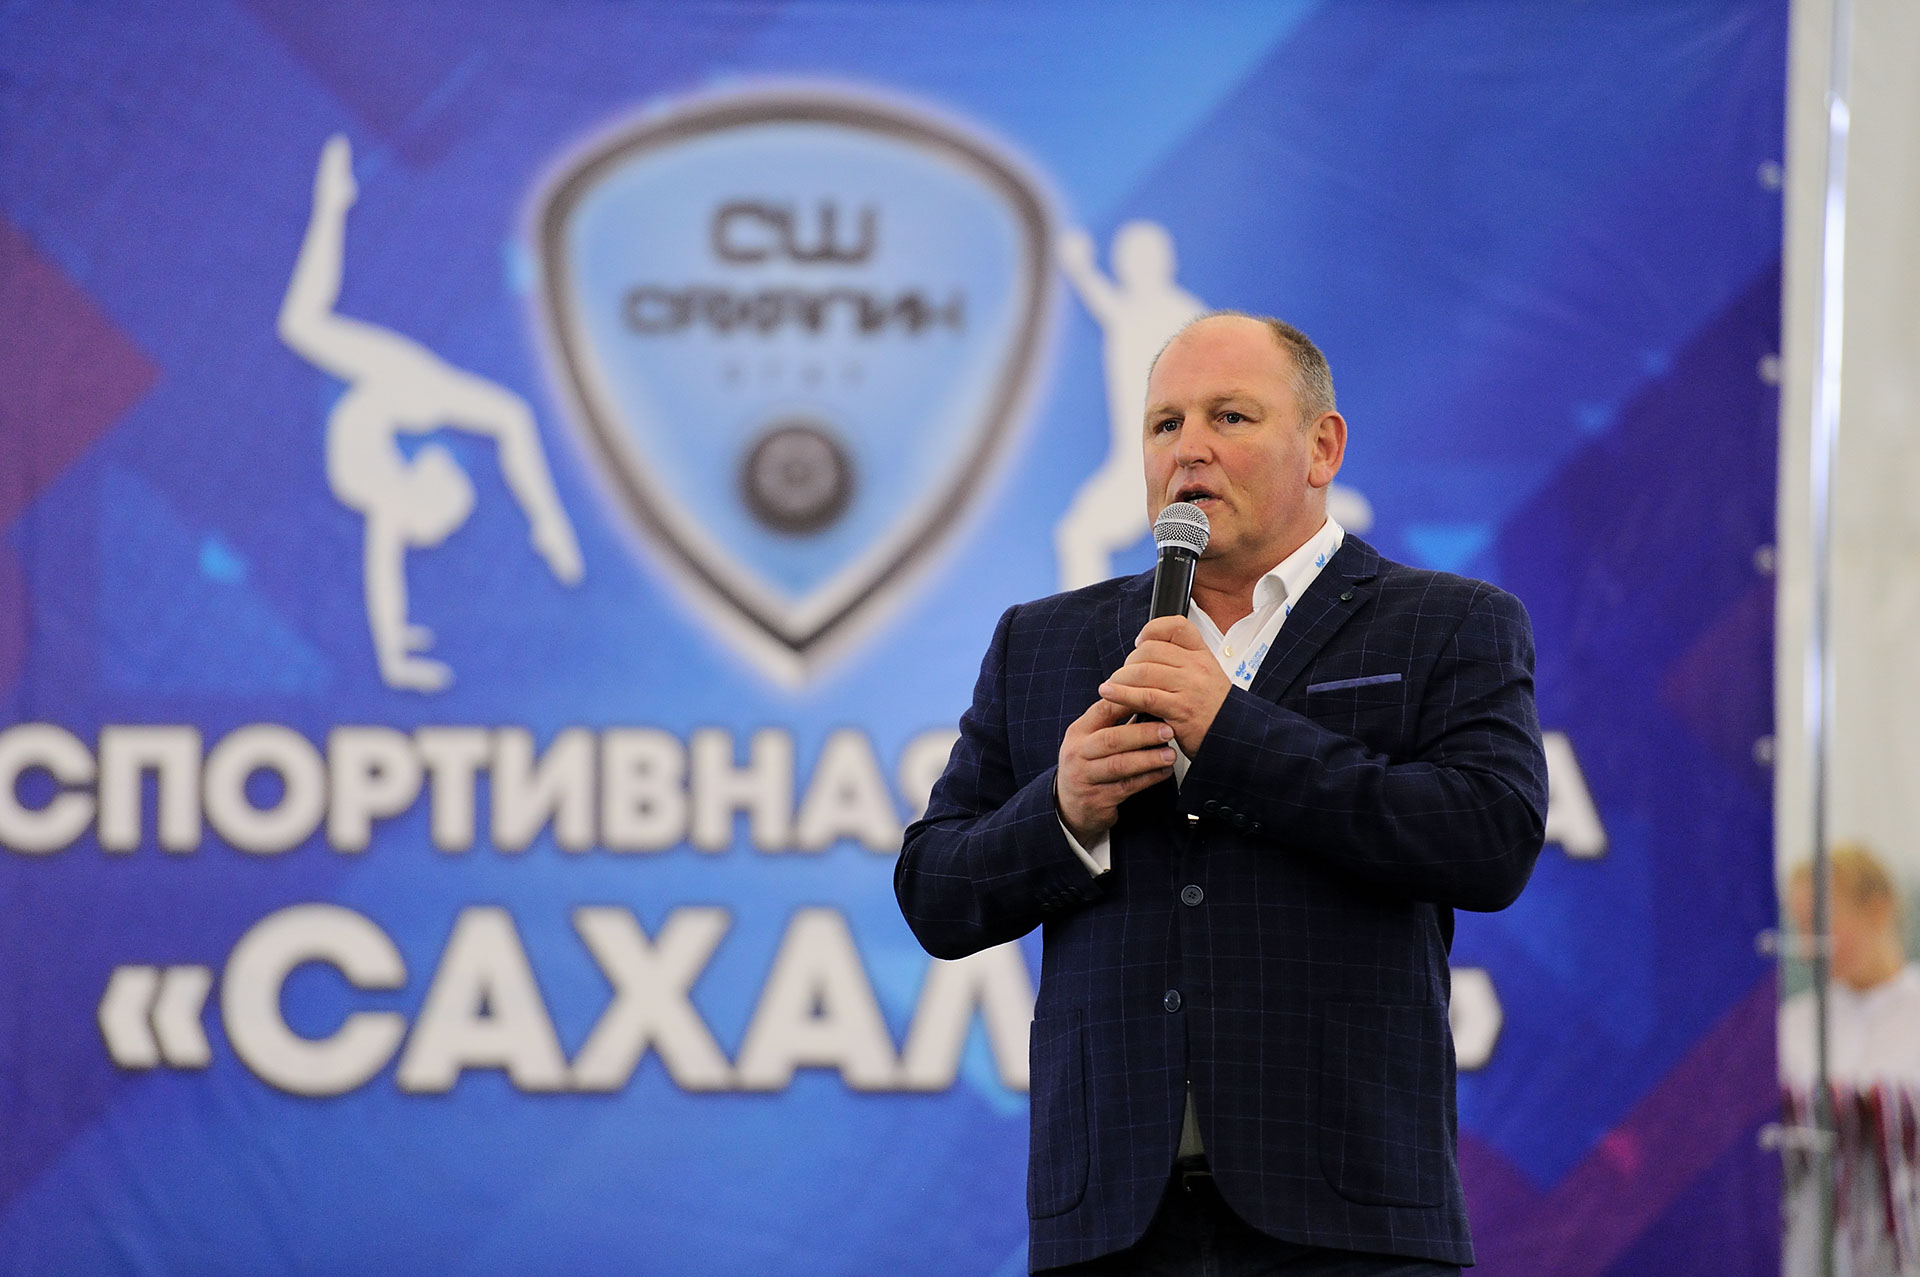 Празднование Дня тренера в ОГАУ "СШ "Сахалин"